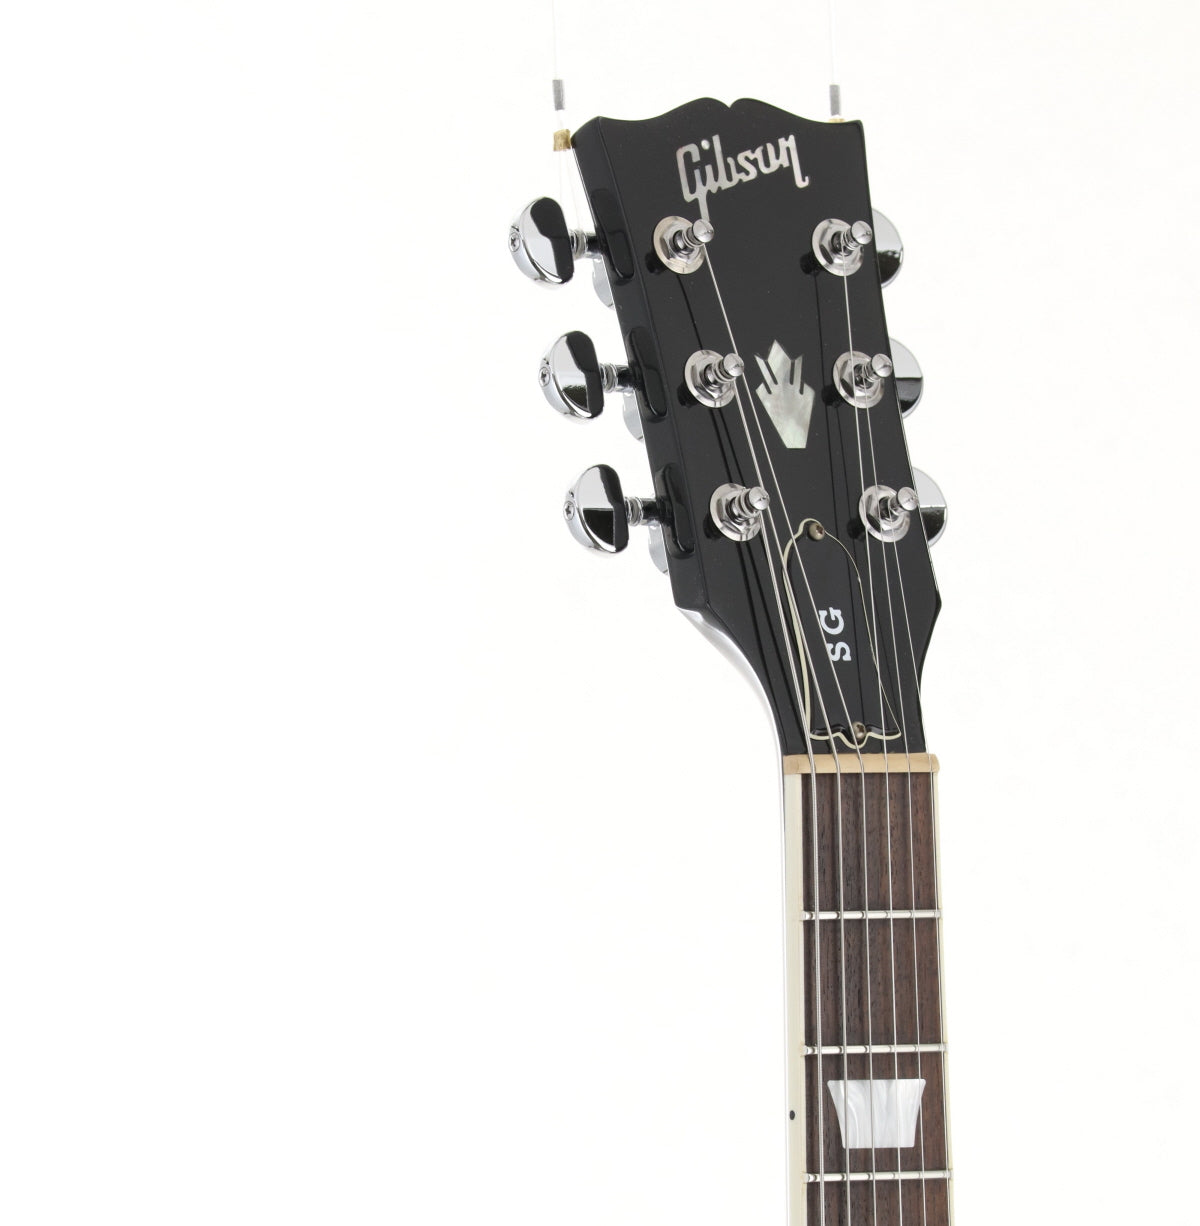 [SN 190028773] USED Gibson / SG Standard Ebony [03]